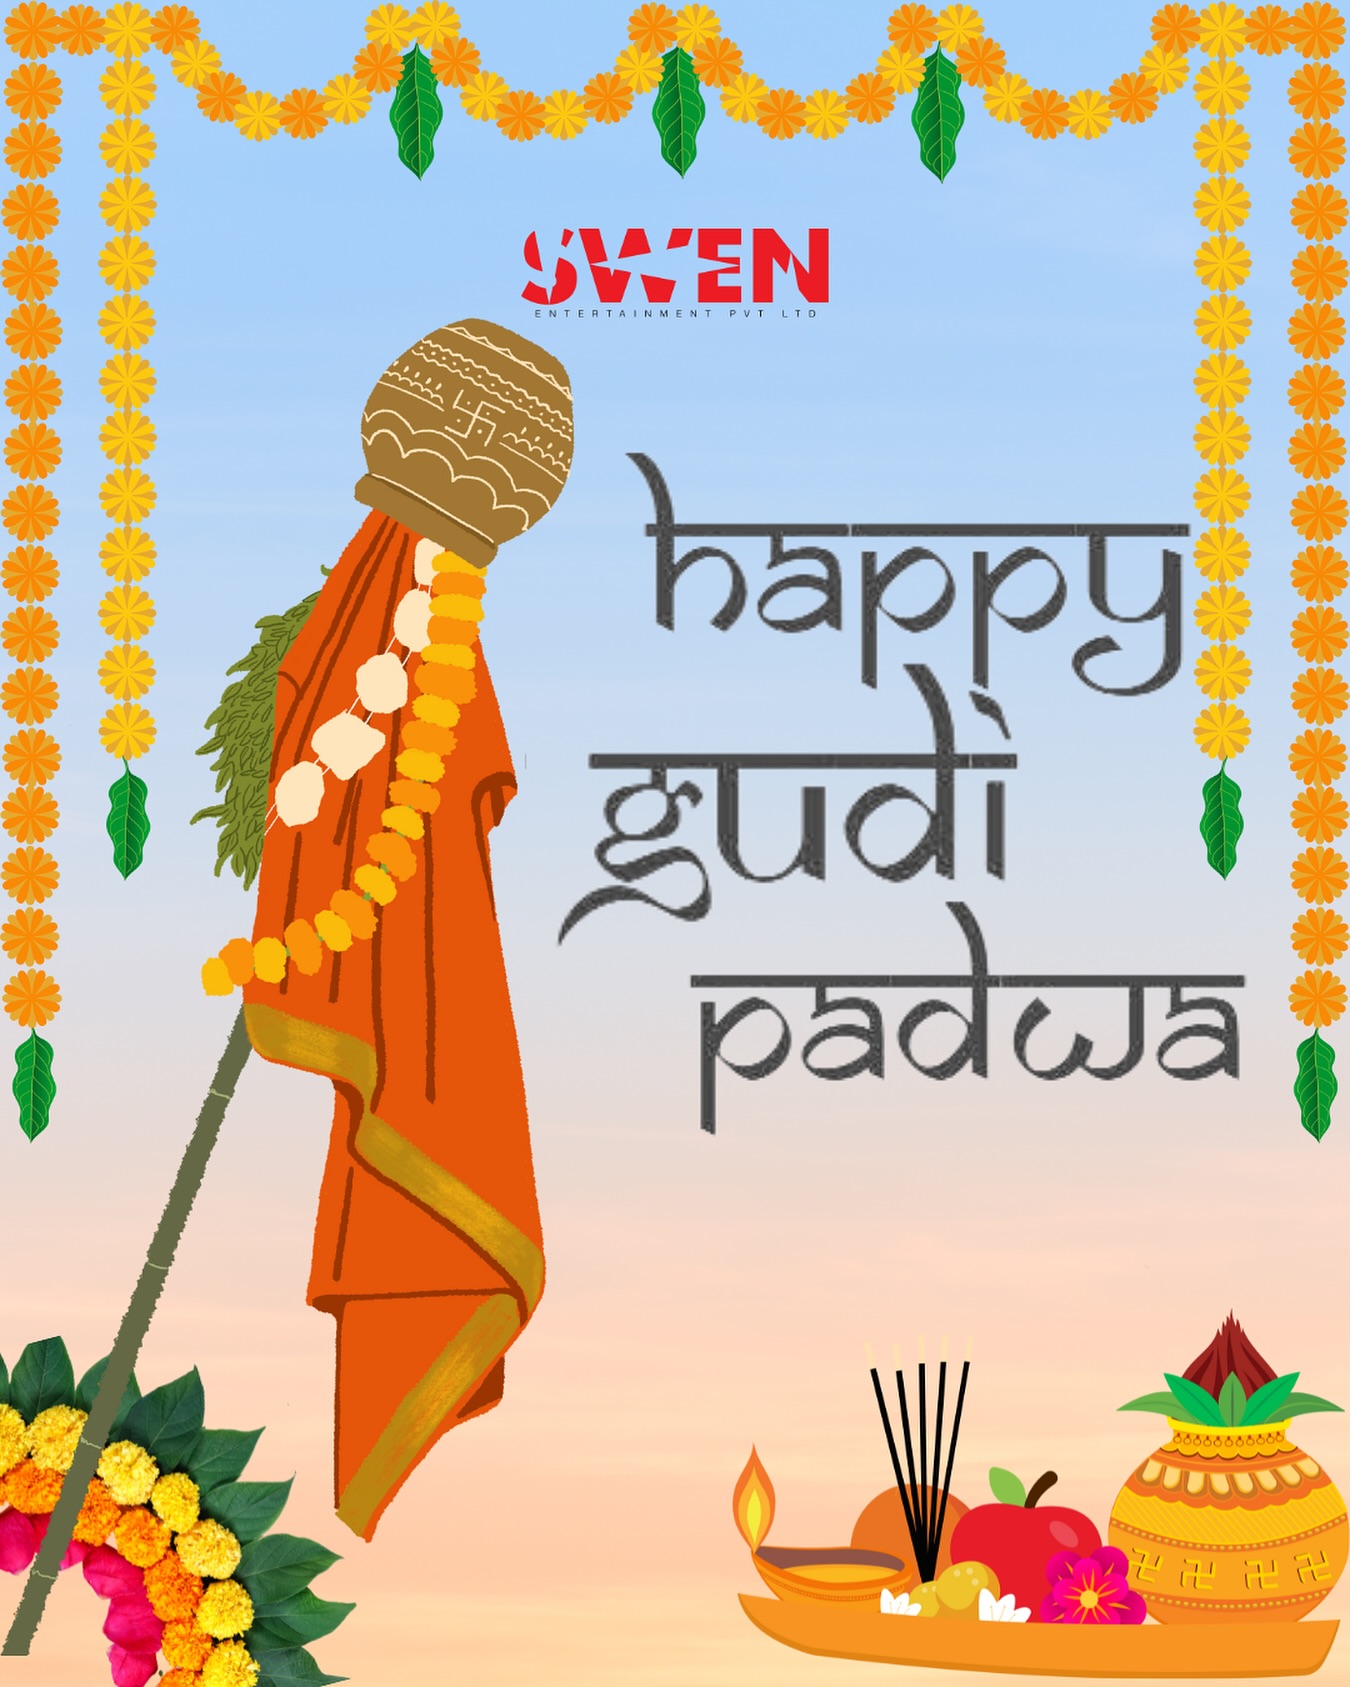 This Gudi Padwa, may you be blessed with good news, togetherness of your loved ones and good fortune. ✨ Happy Gudi Padwa to you and your family! ❤️ 

Follow @swenentertainment for more! 

___

#gudipadwa #mumbai #gudipadwaspecial #ugadi #festival #maharashtra #marathi #maharashtrian #newyear #happygudipadwa #rangoli #ig #mh #marathiculture #india #marathinewyear #pune #gudi #indianfestival #instagram #marathitradition #indianfestivals #happygudipadwa